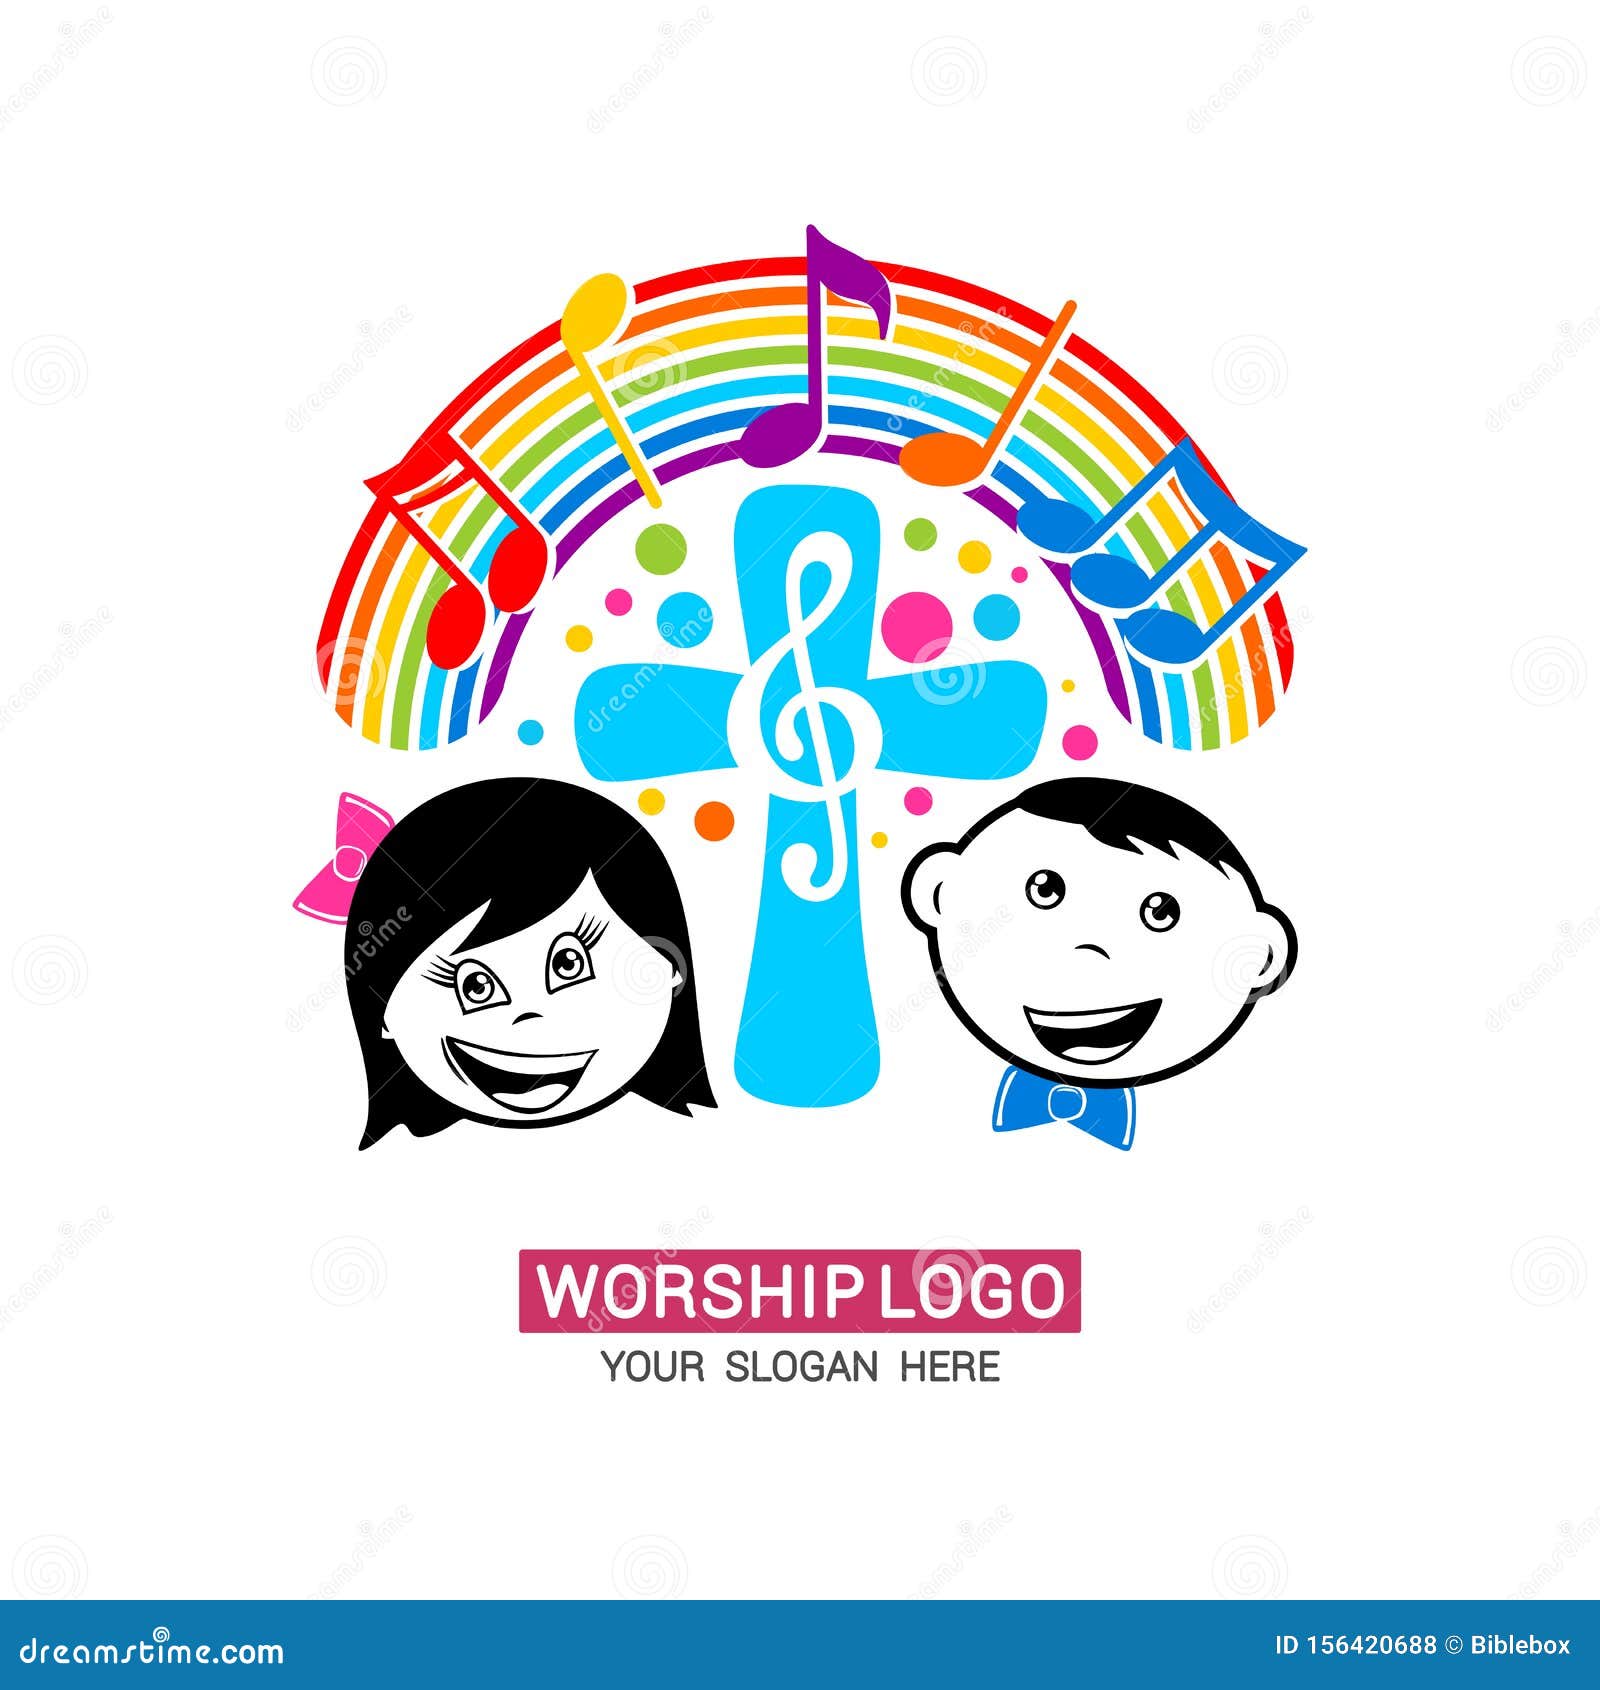 worship logo. children glorify god, sing glory and praise to him